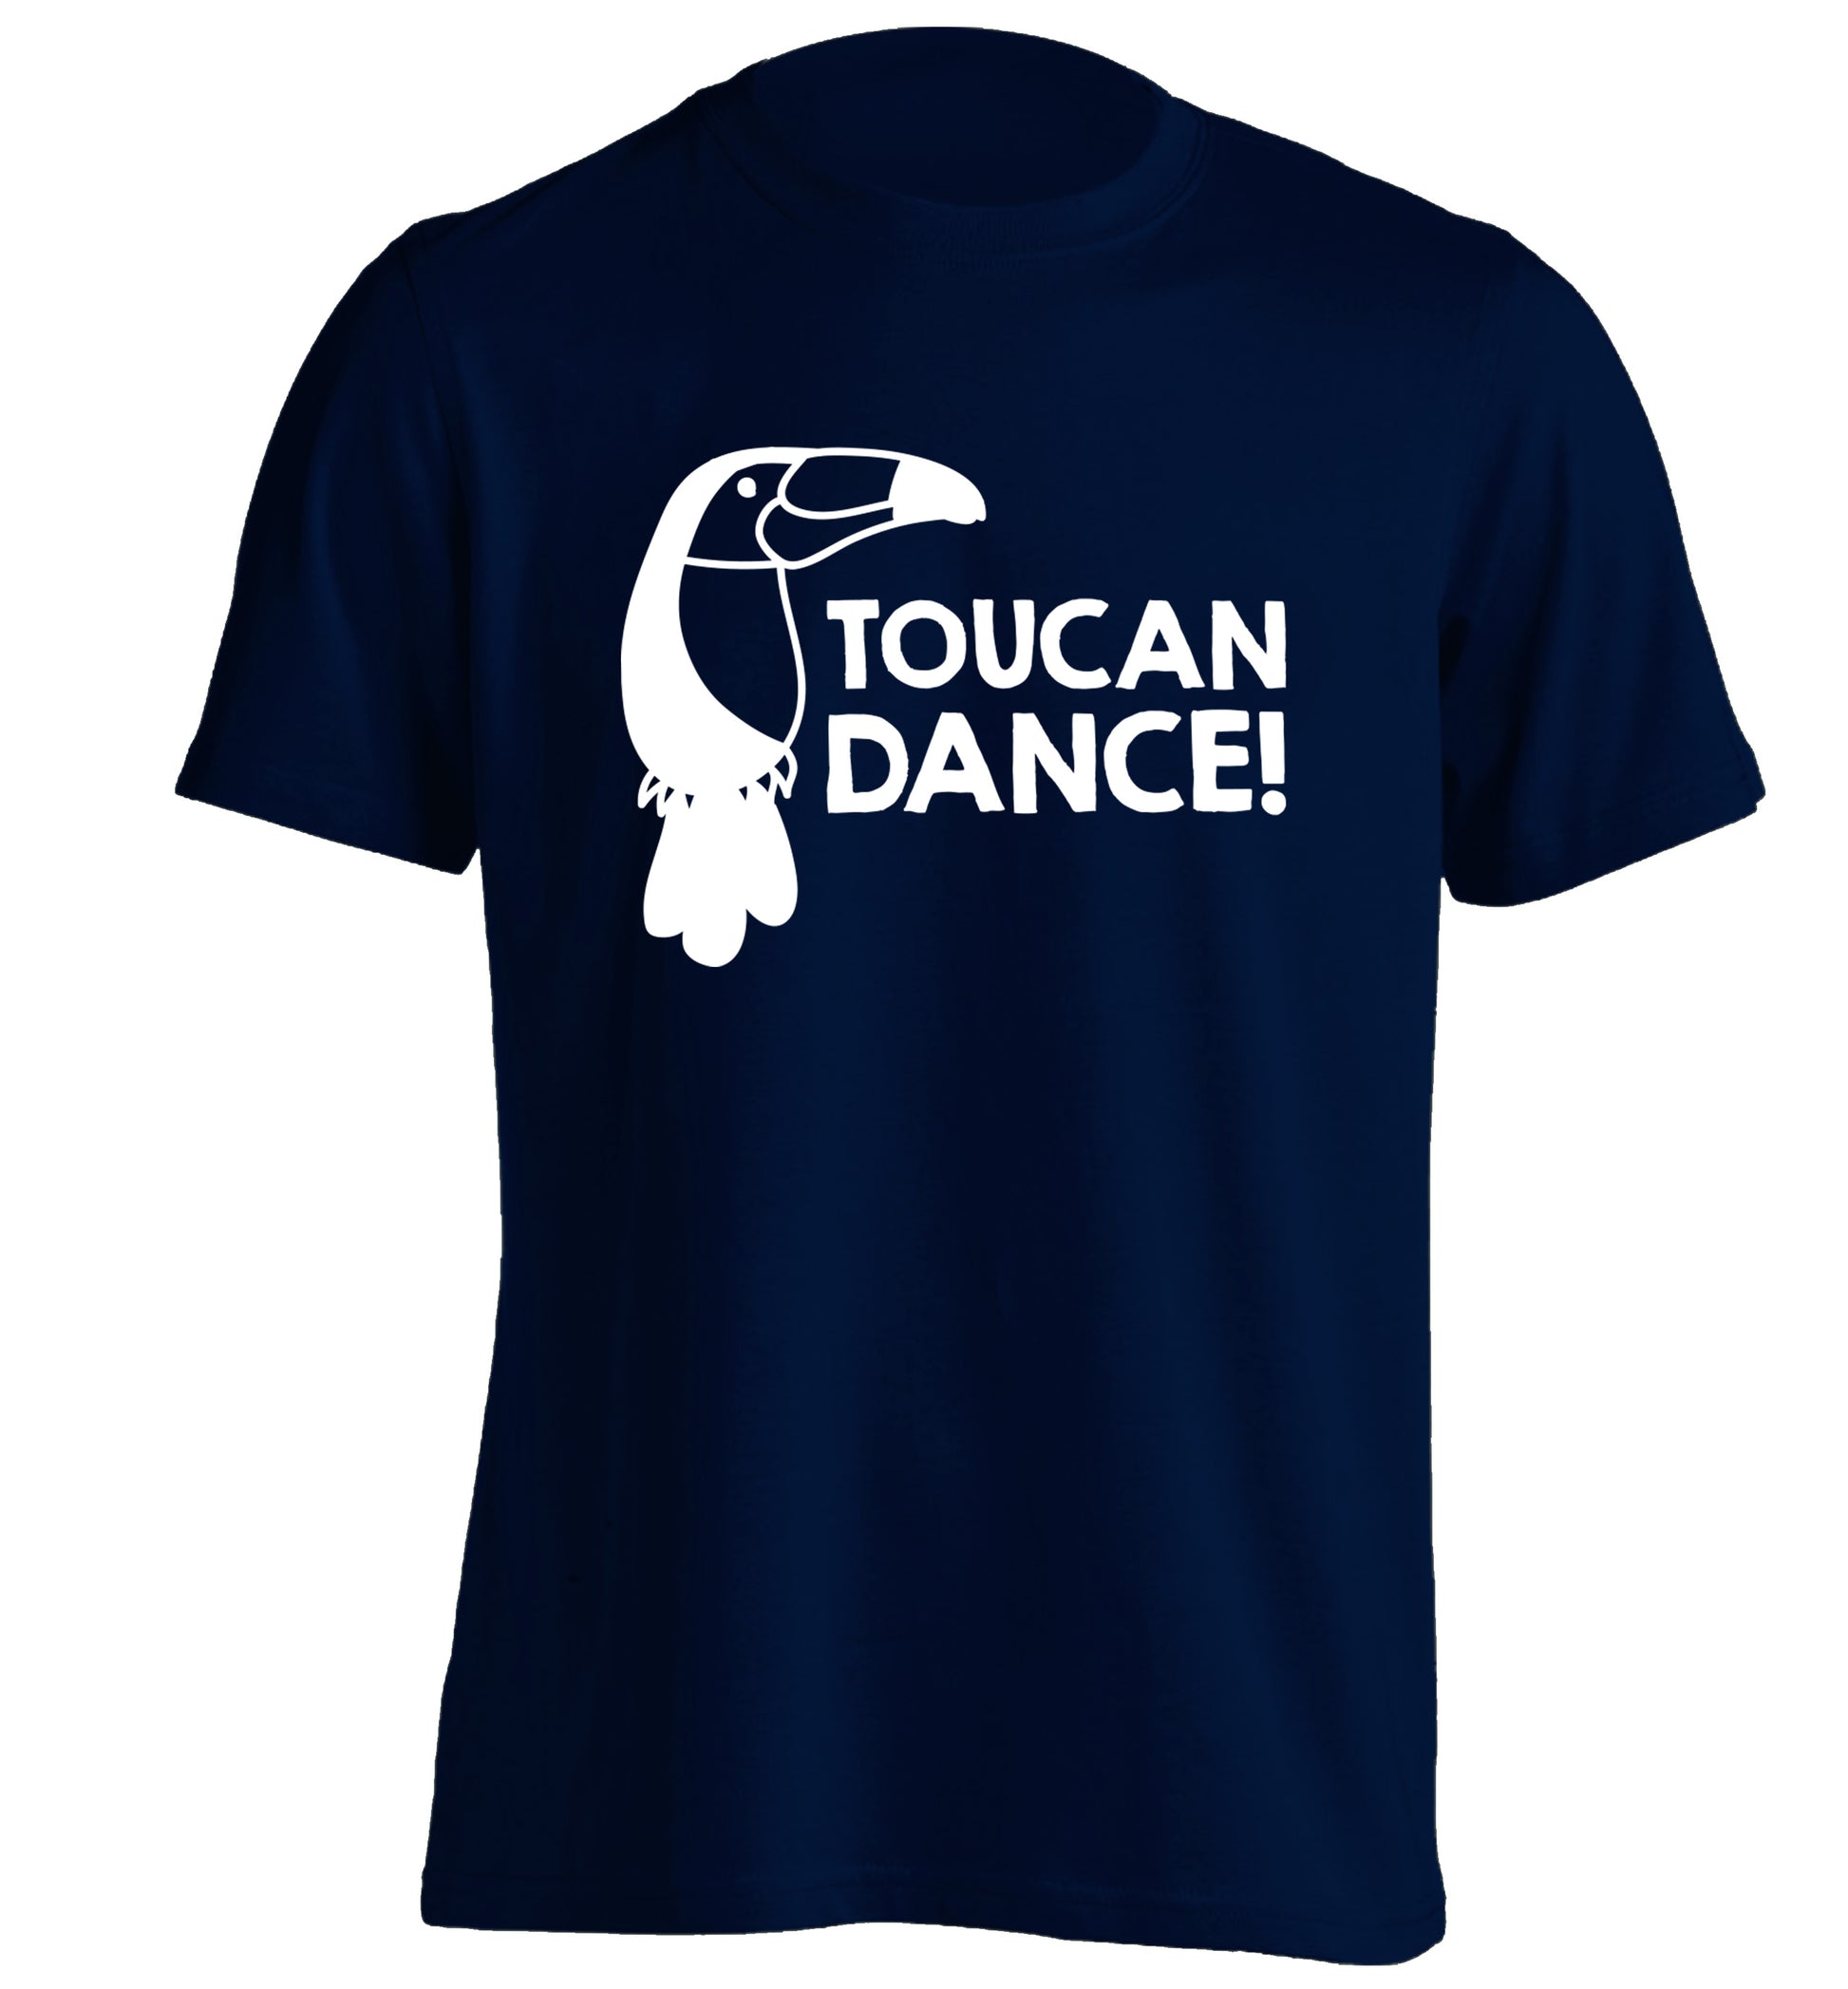 Toucan dance adults unisex navy Tshirt 2XL